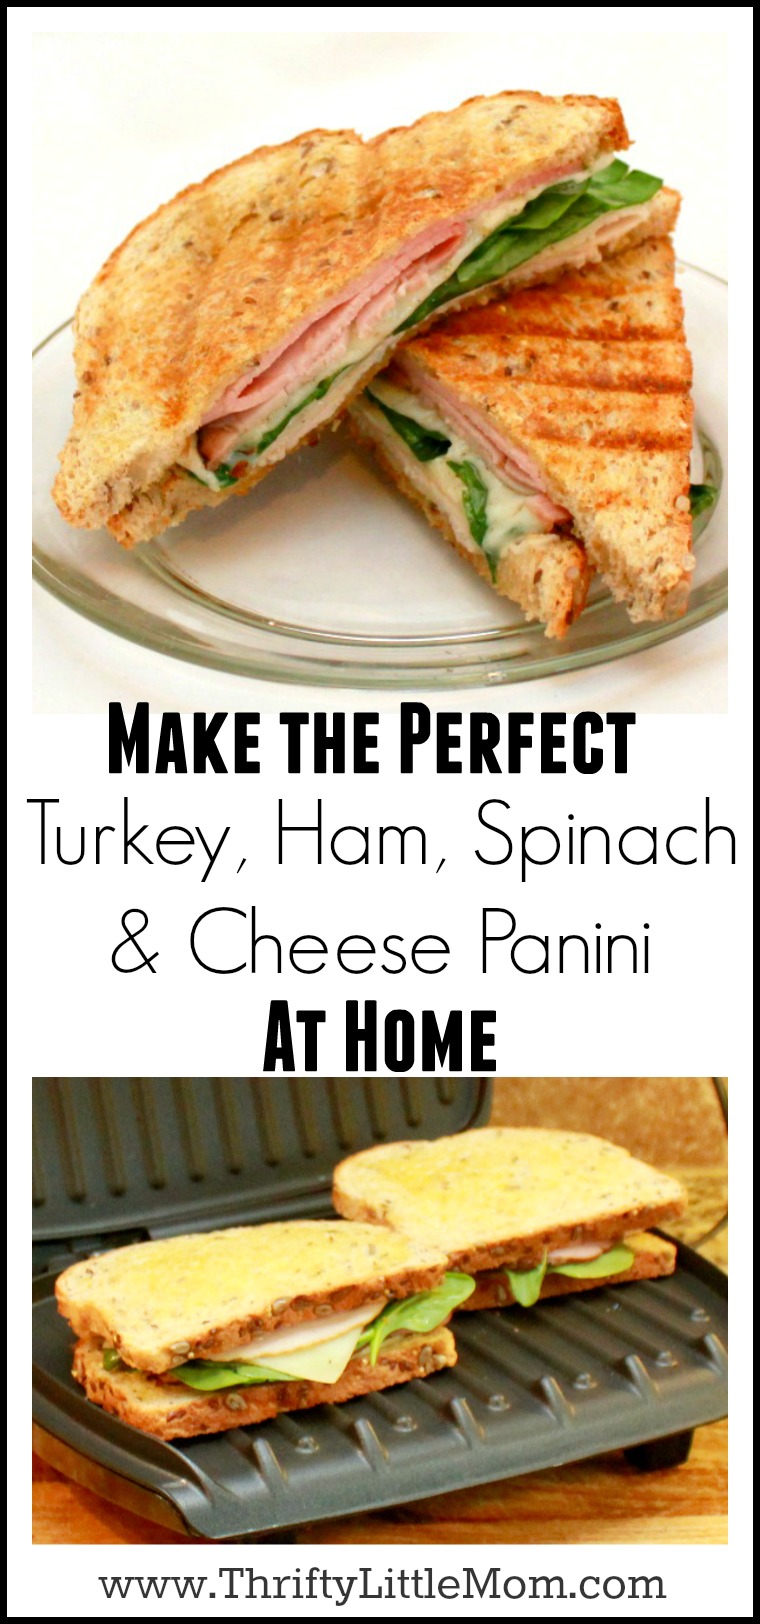 Easy Turkey, Ham, Spinach & Cheese Panini Recipe » Thrifty Little Mom